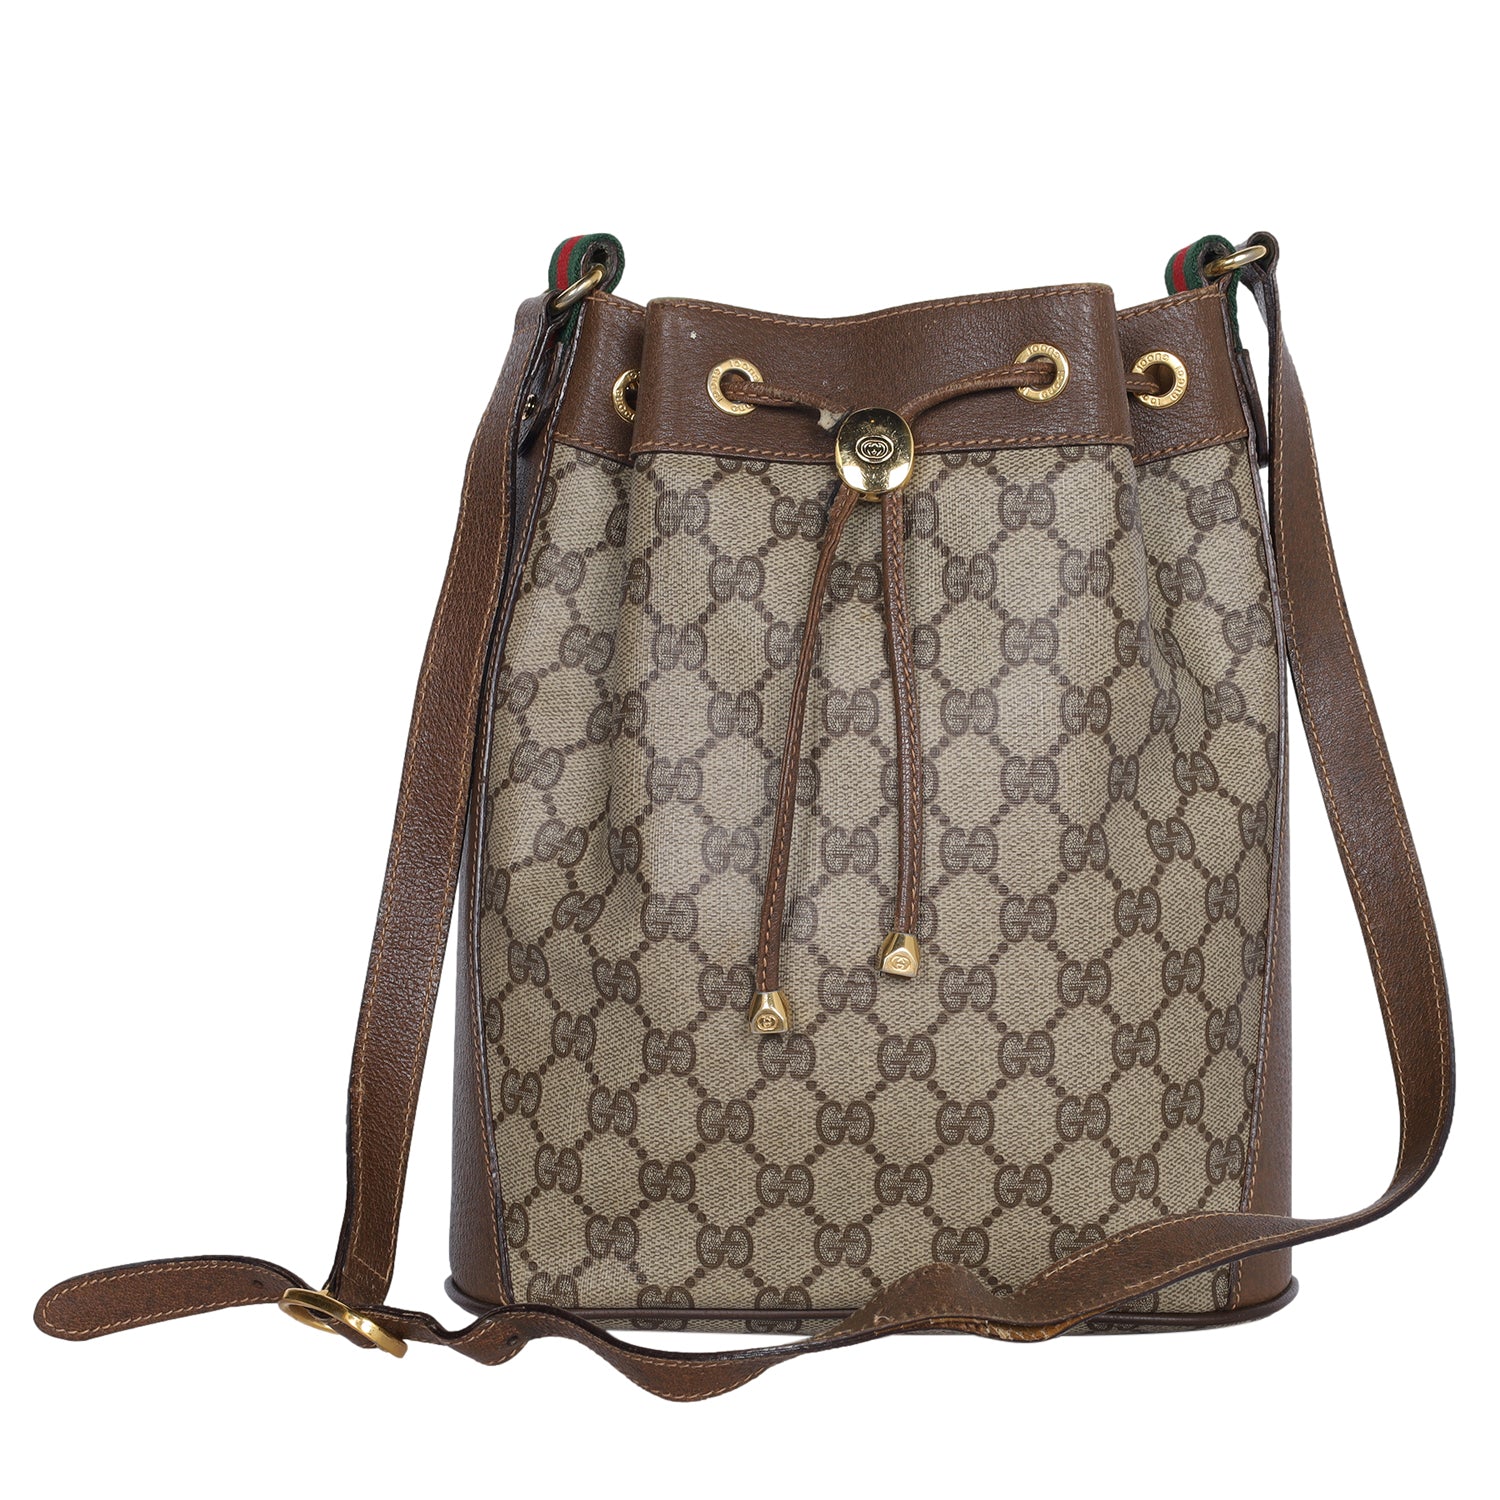 Gucci GG Supreme Monogram Canvas Shoulder Bag